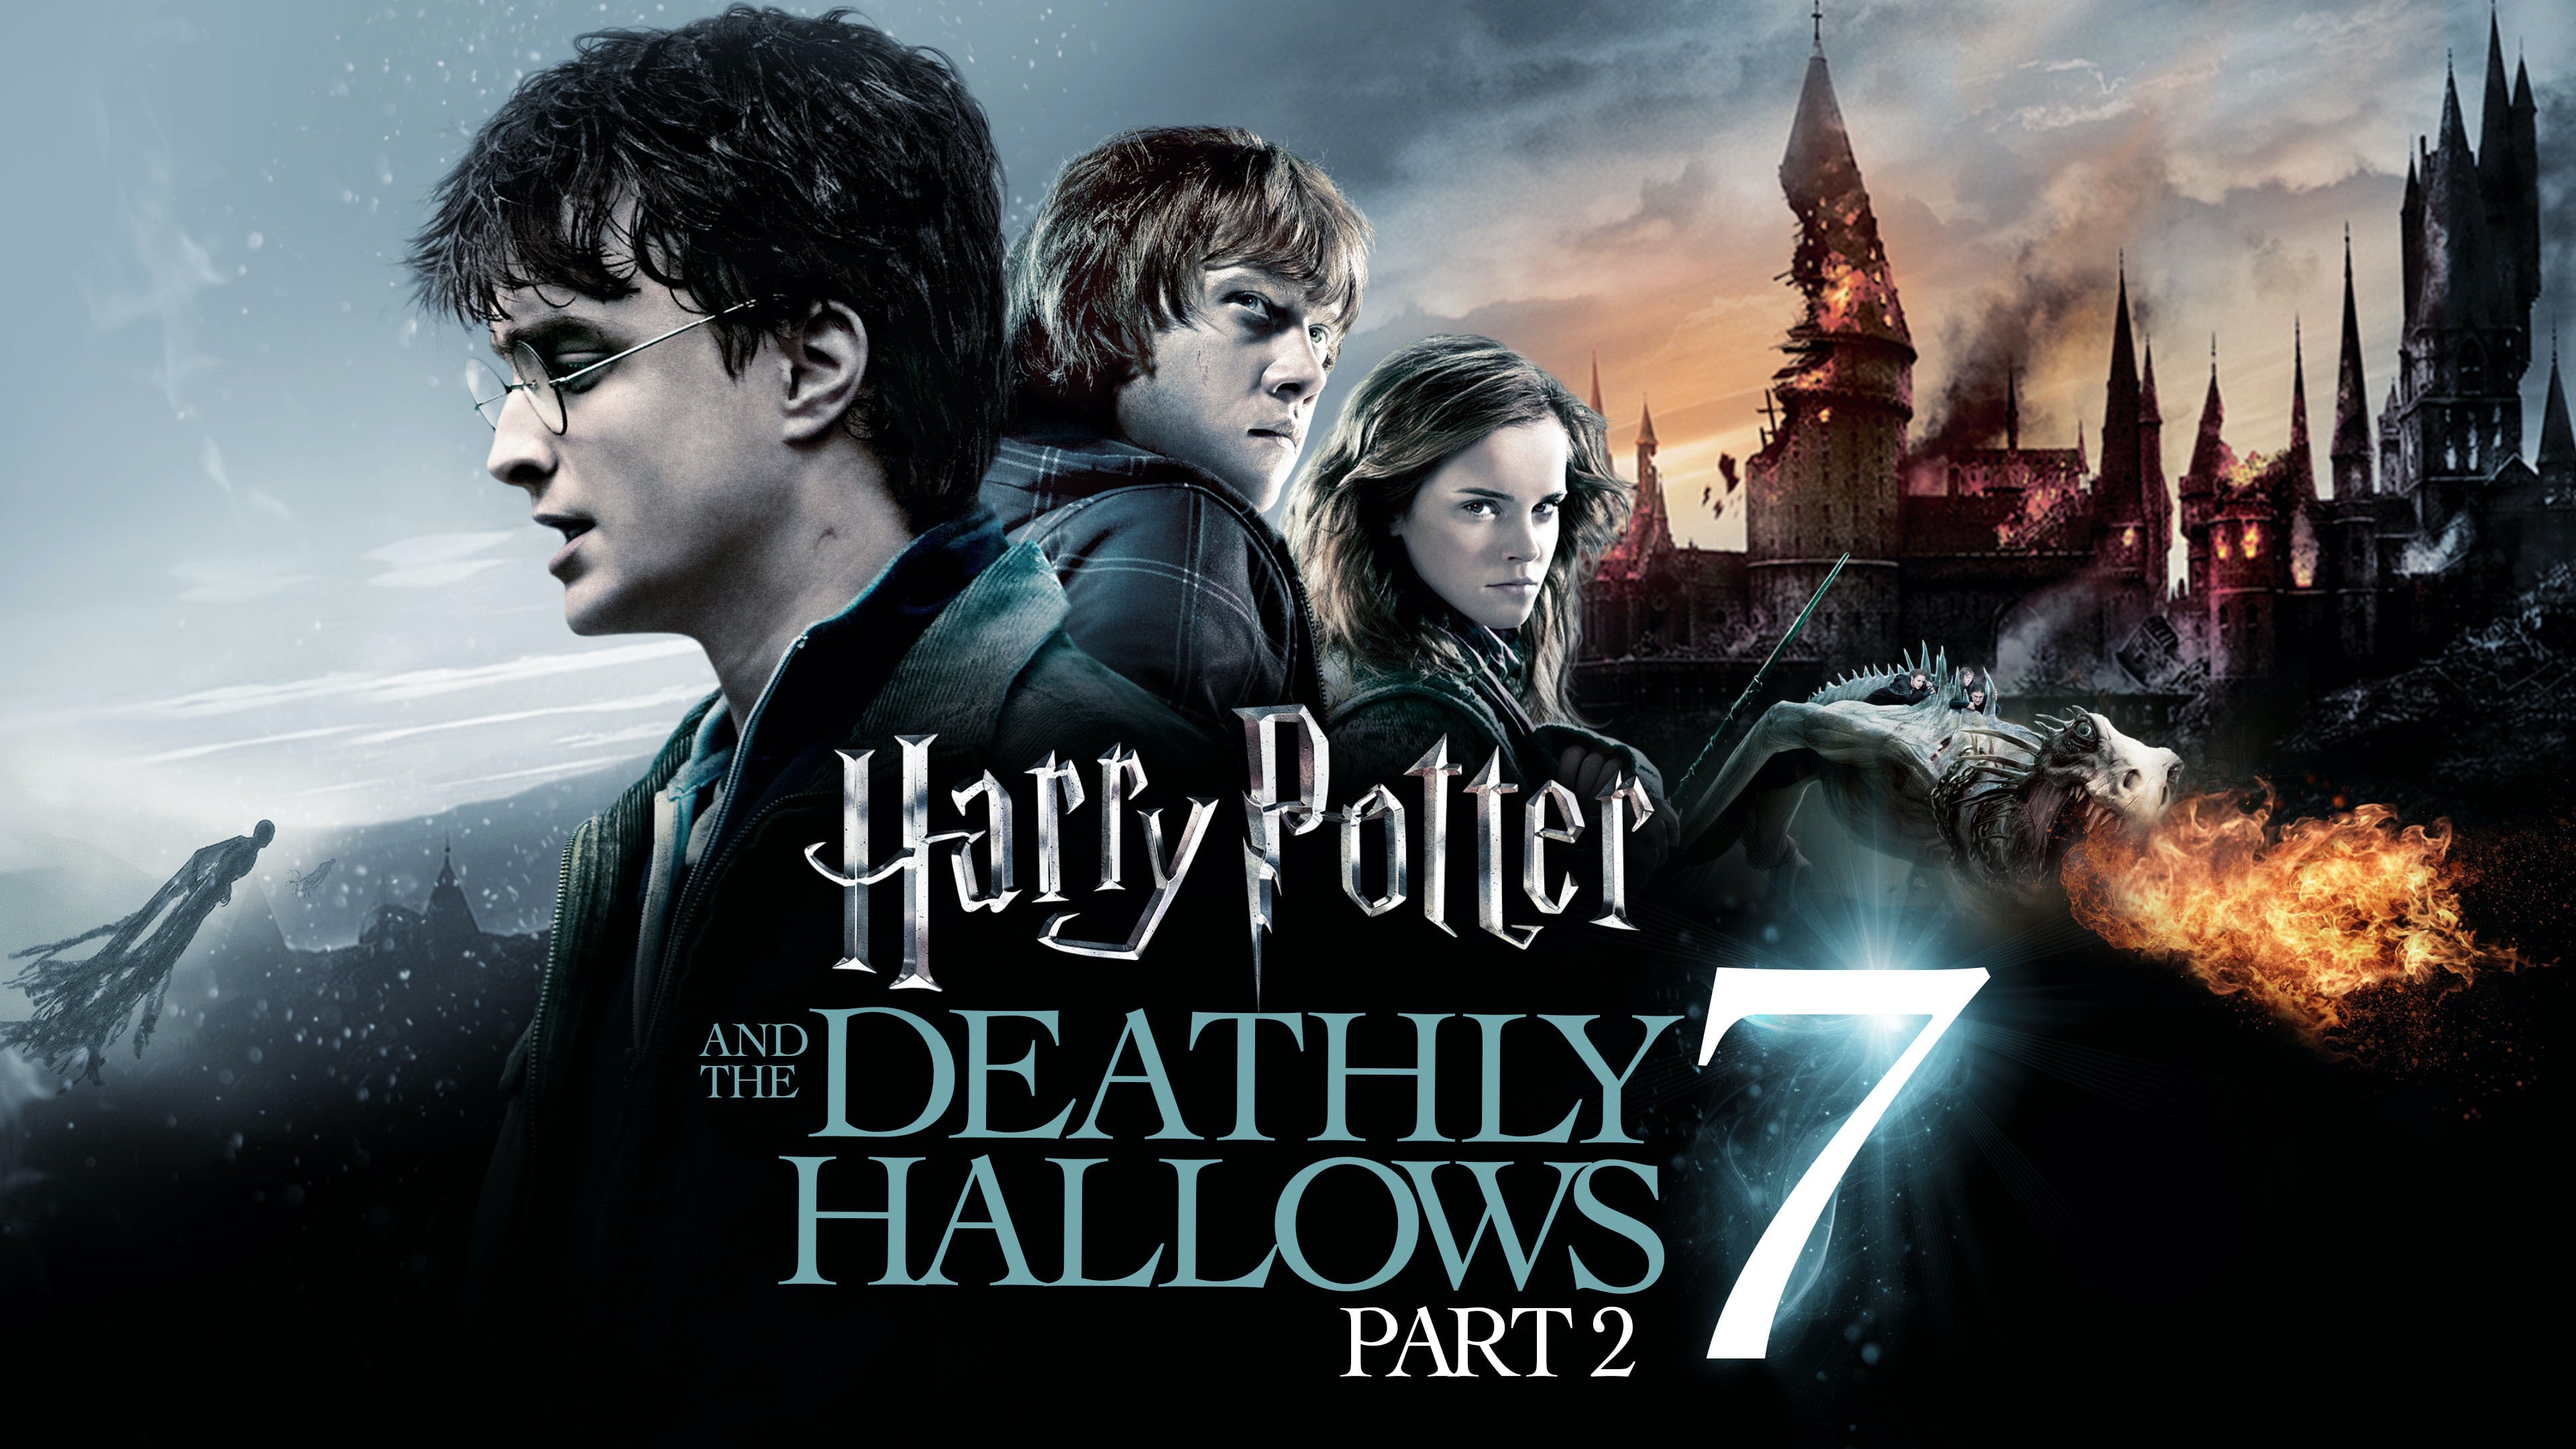 Harry potter 7. Гарри Поттер и дары смерти 2. Гарри Поттер и дары смерти 1. The Deathly Hallows фильм 2010. Гарри Поттер и дары смерти фильм.